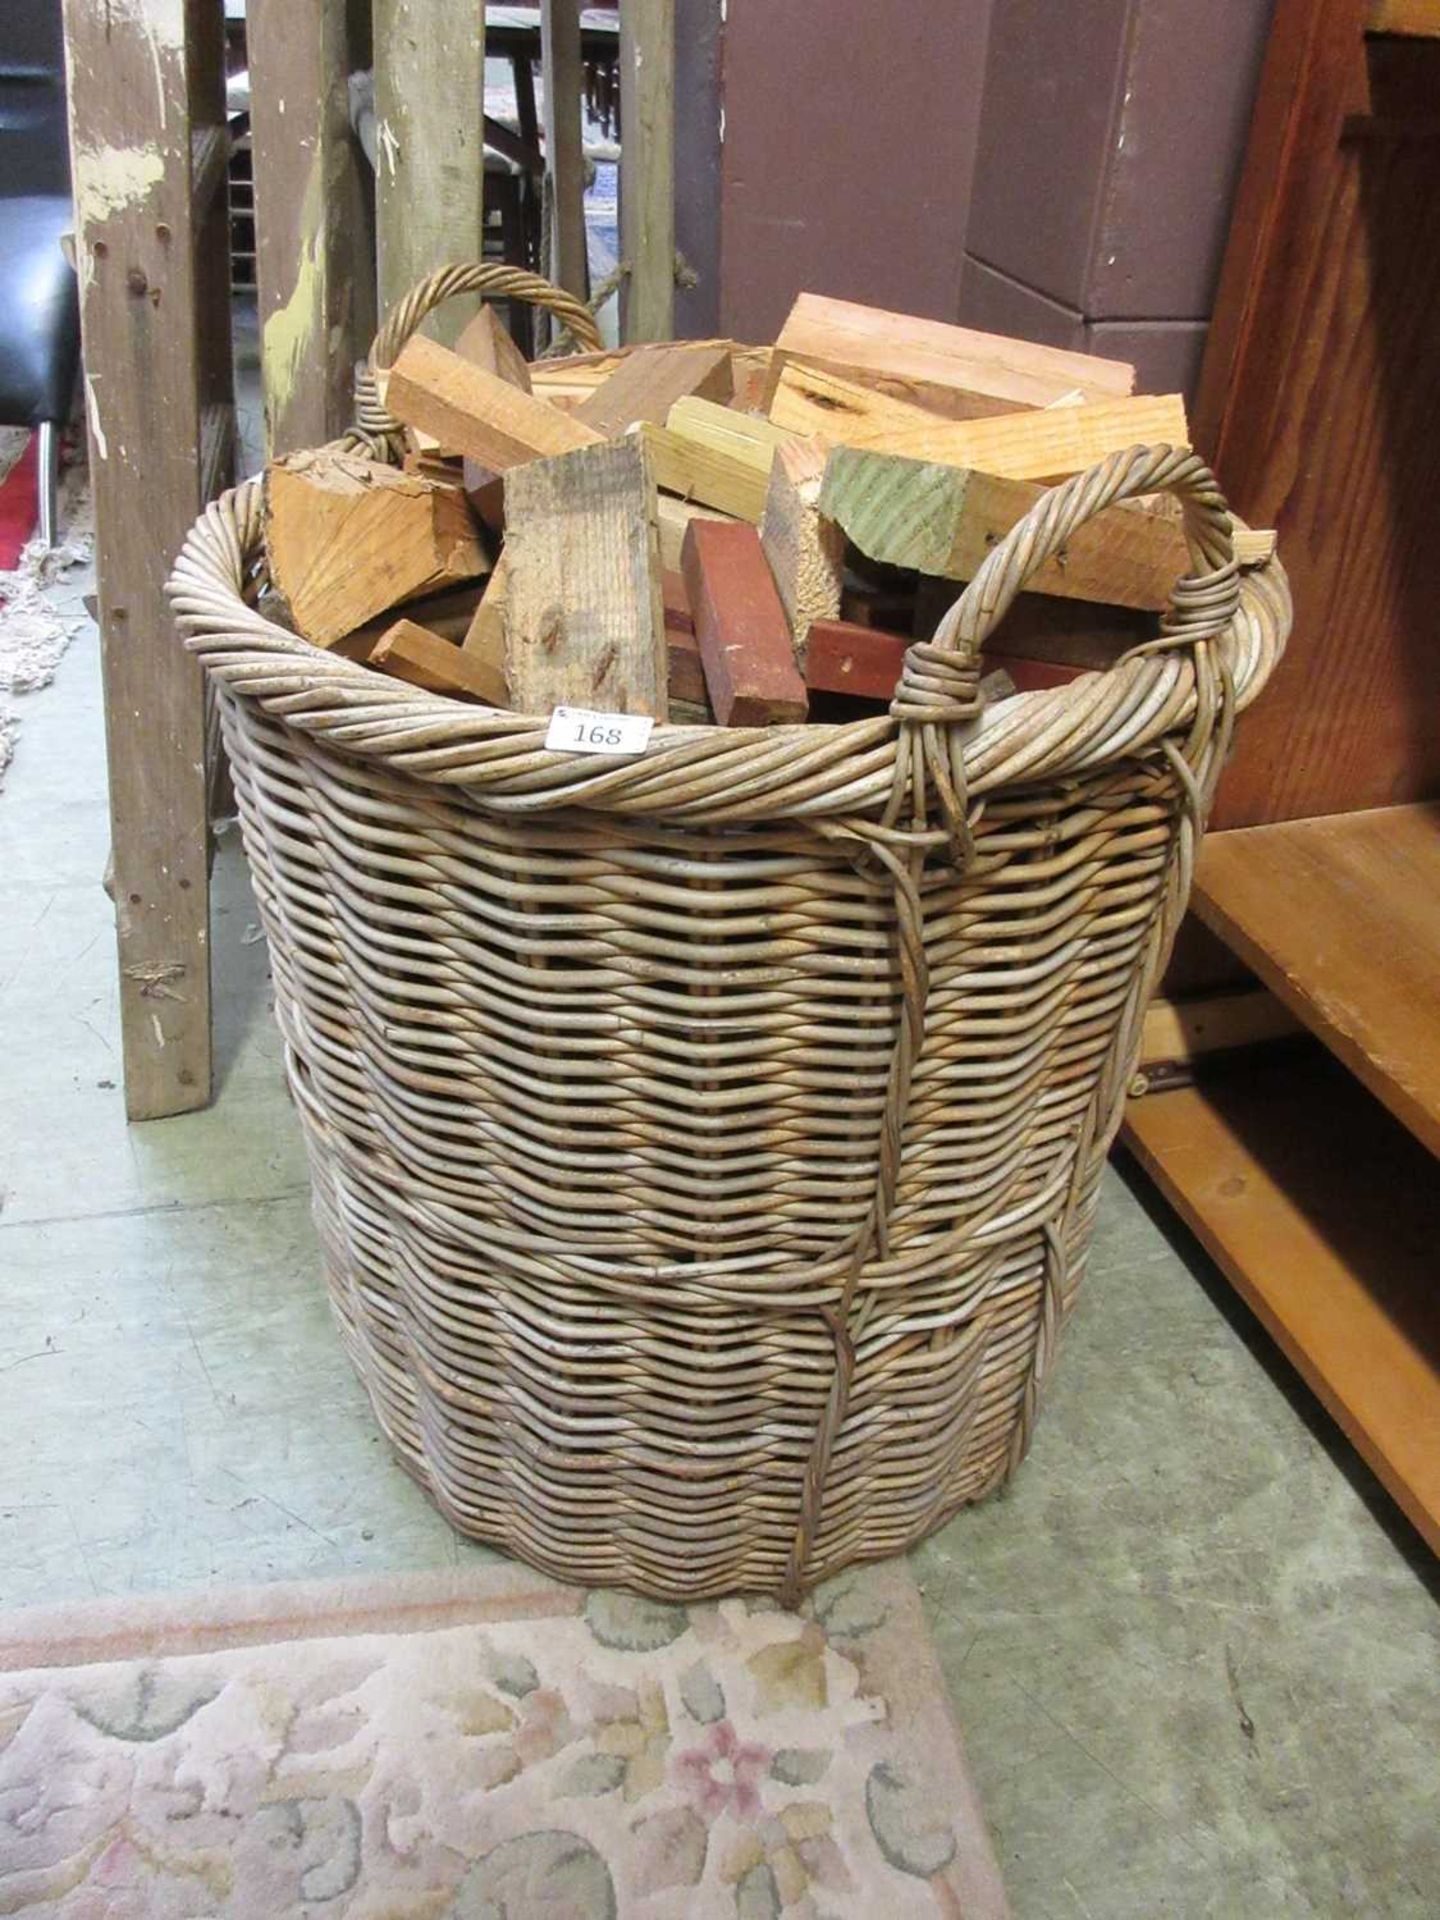 A large wicker log bin containing logs